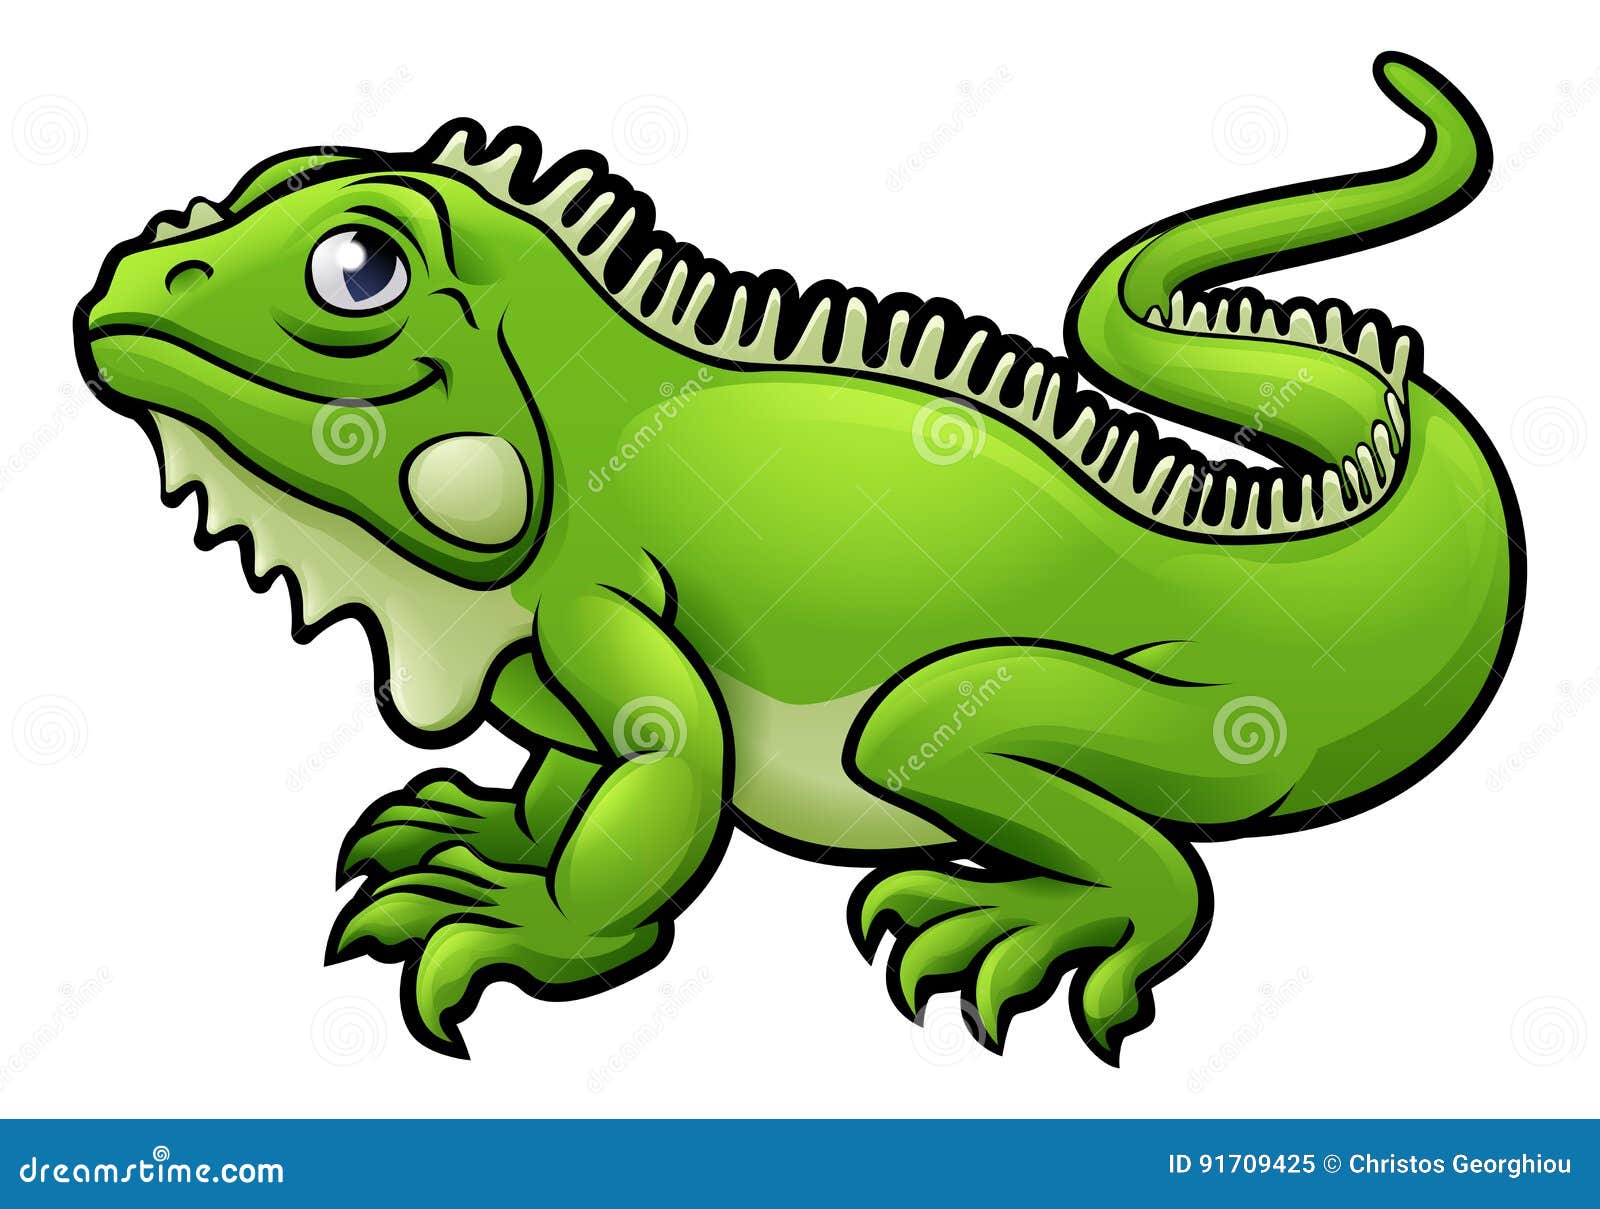 iguana lizard cartoon character